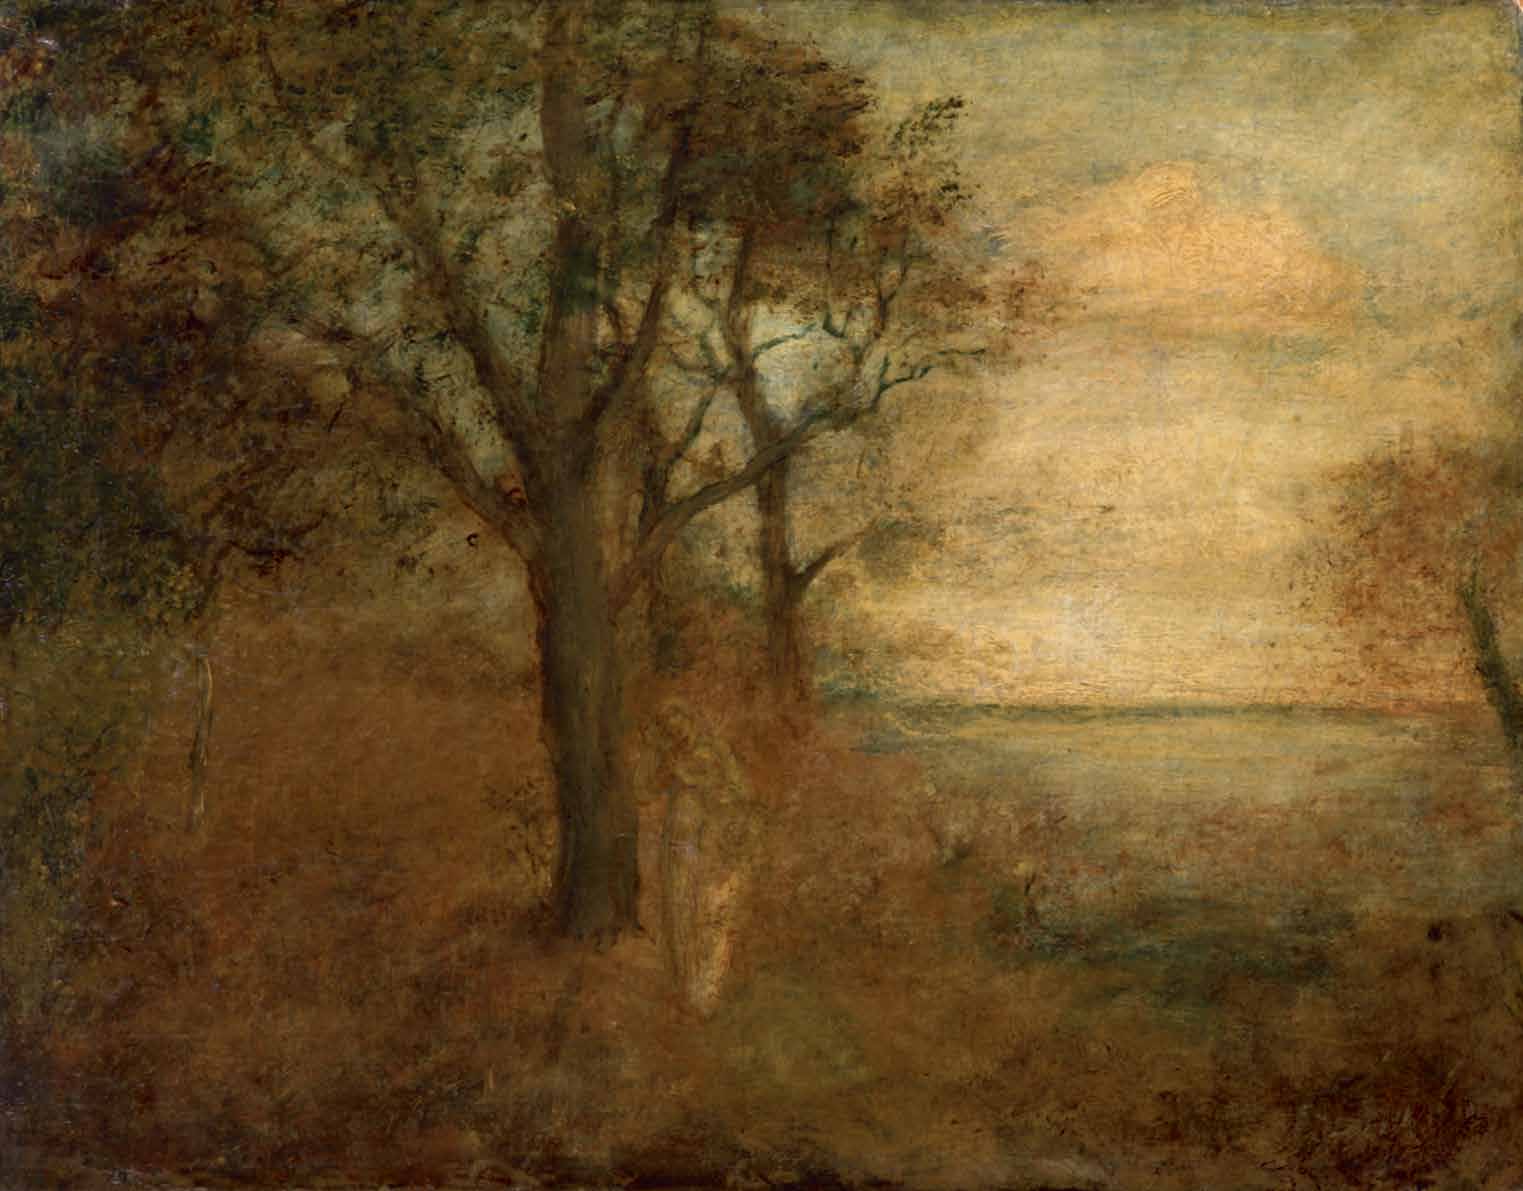 Albert Pinkham Ryder, "Spring," ca. 1879 Oil on canvas